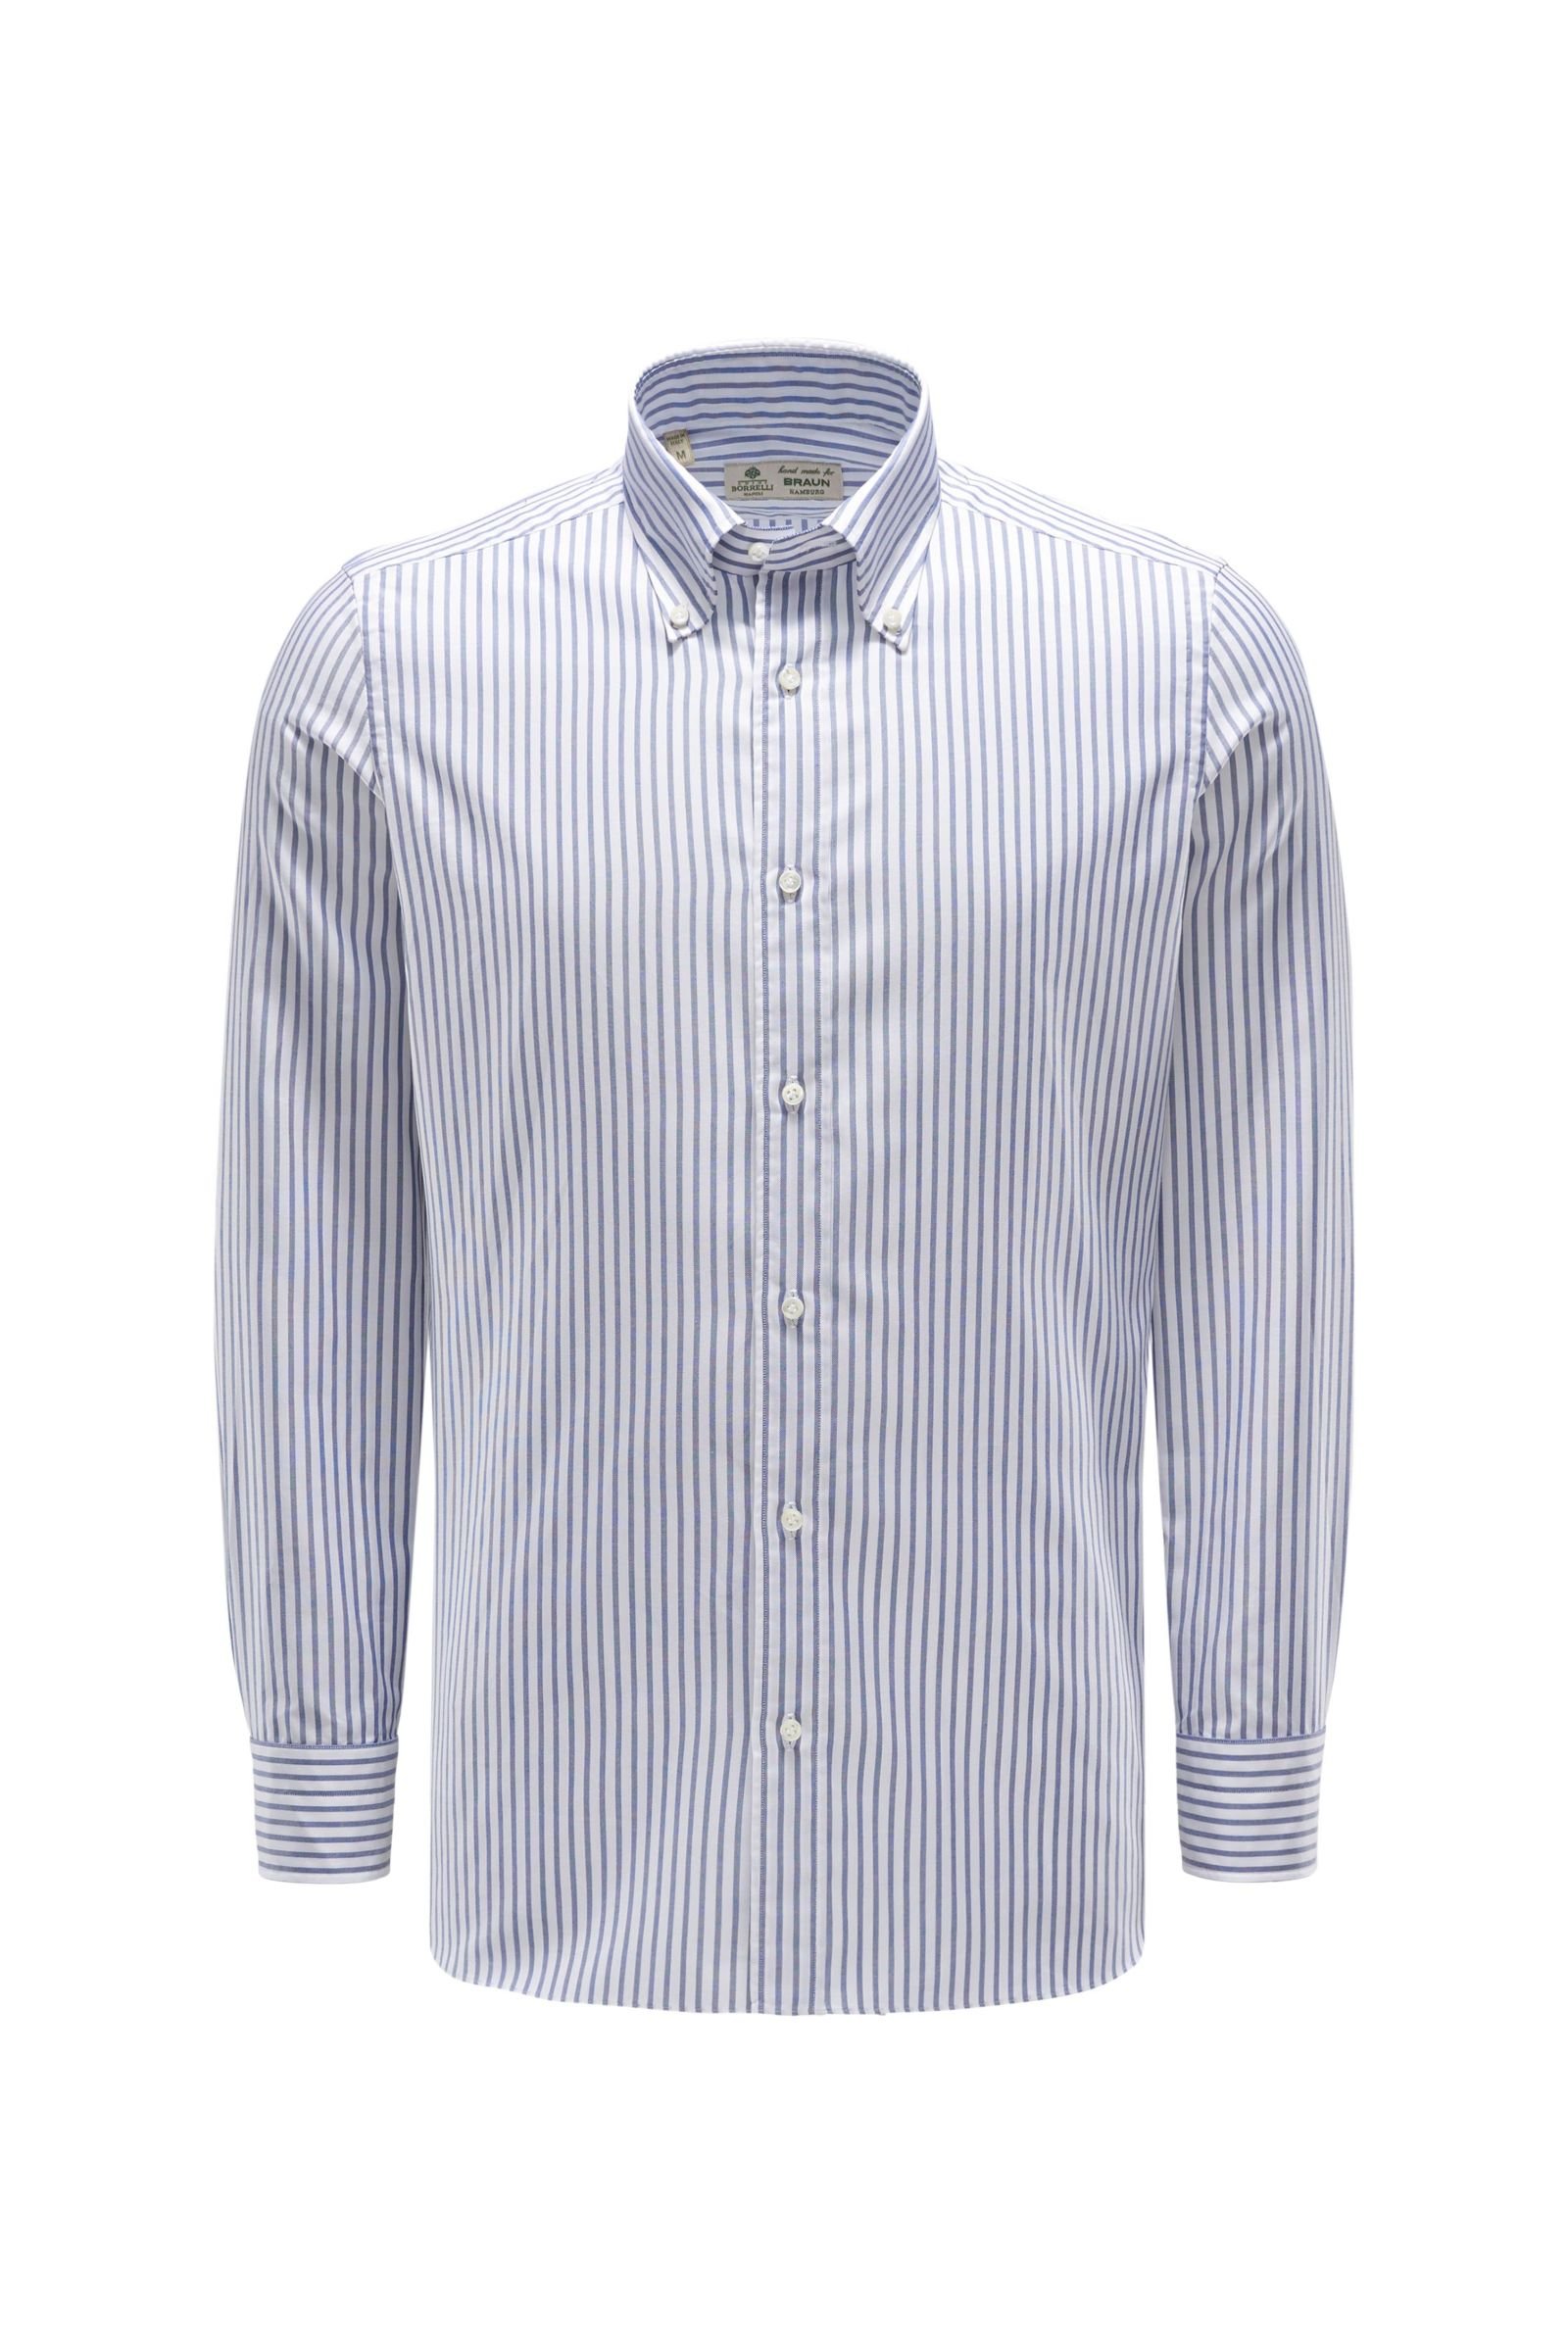 Oxford shirt button-down collar grey-blue/white striped